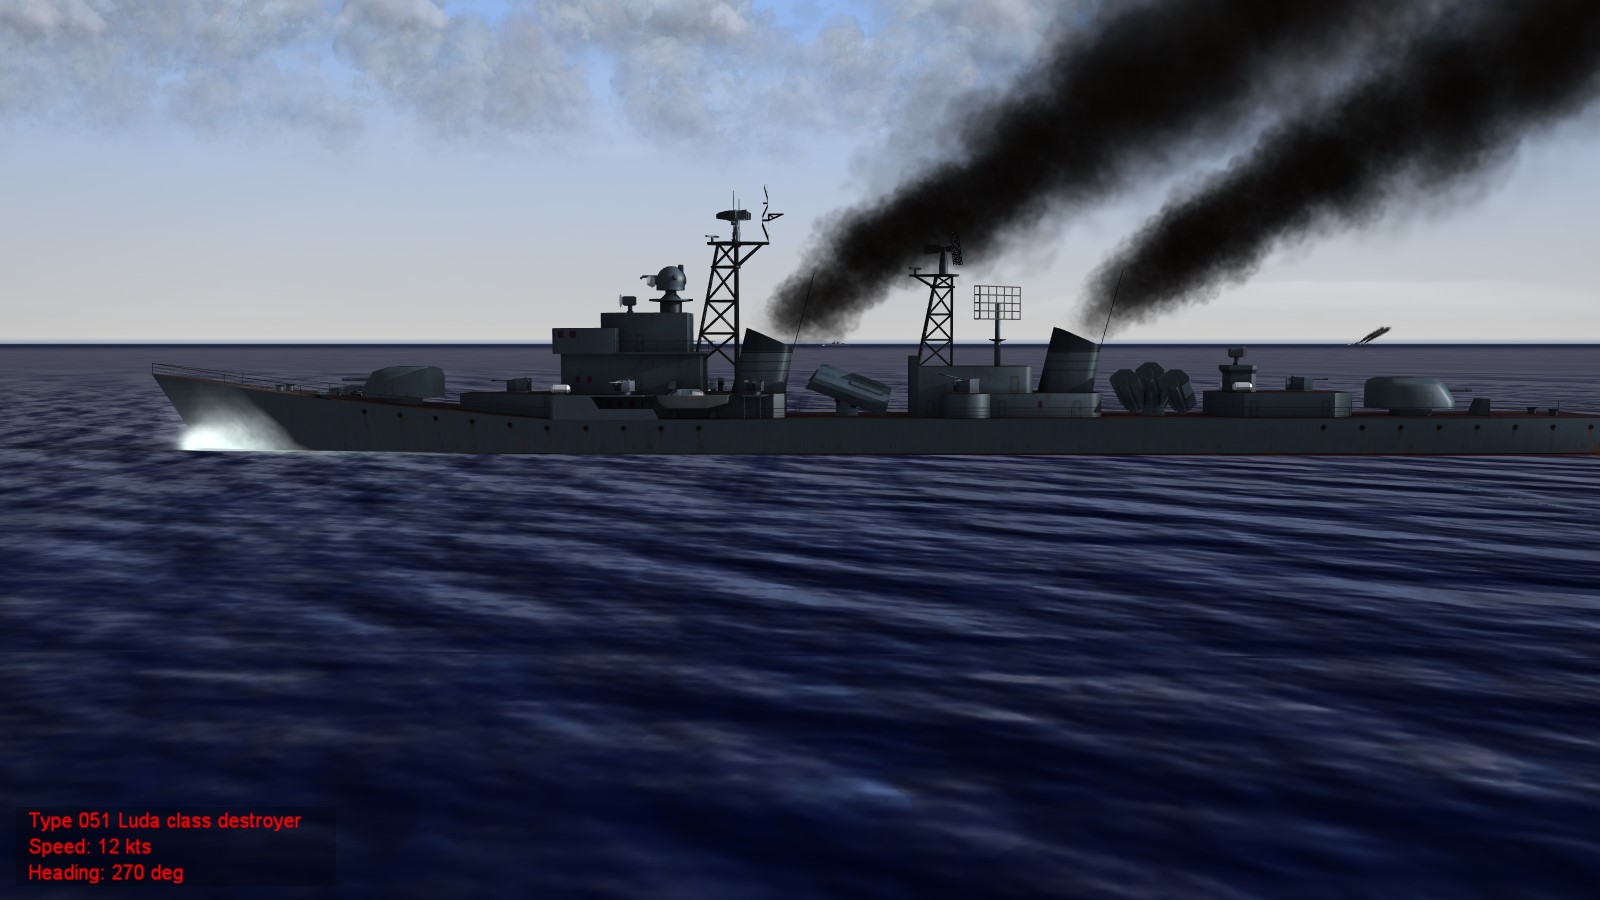 Luda class destroyers